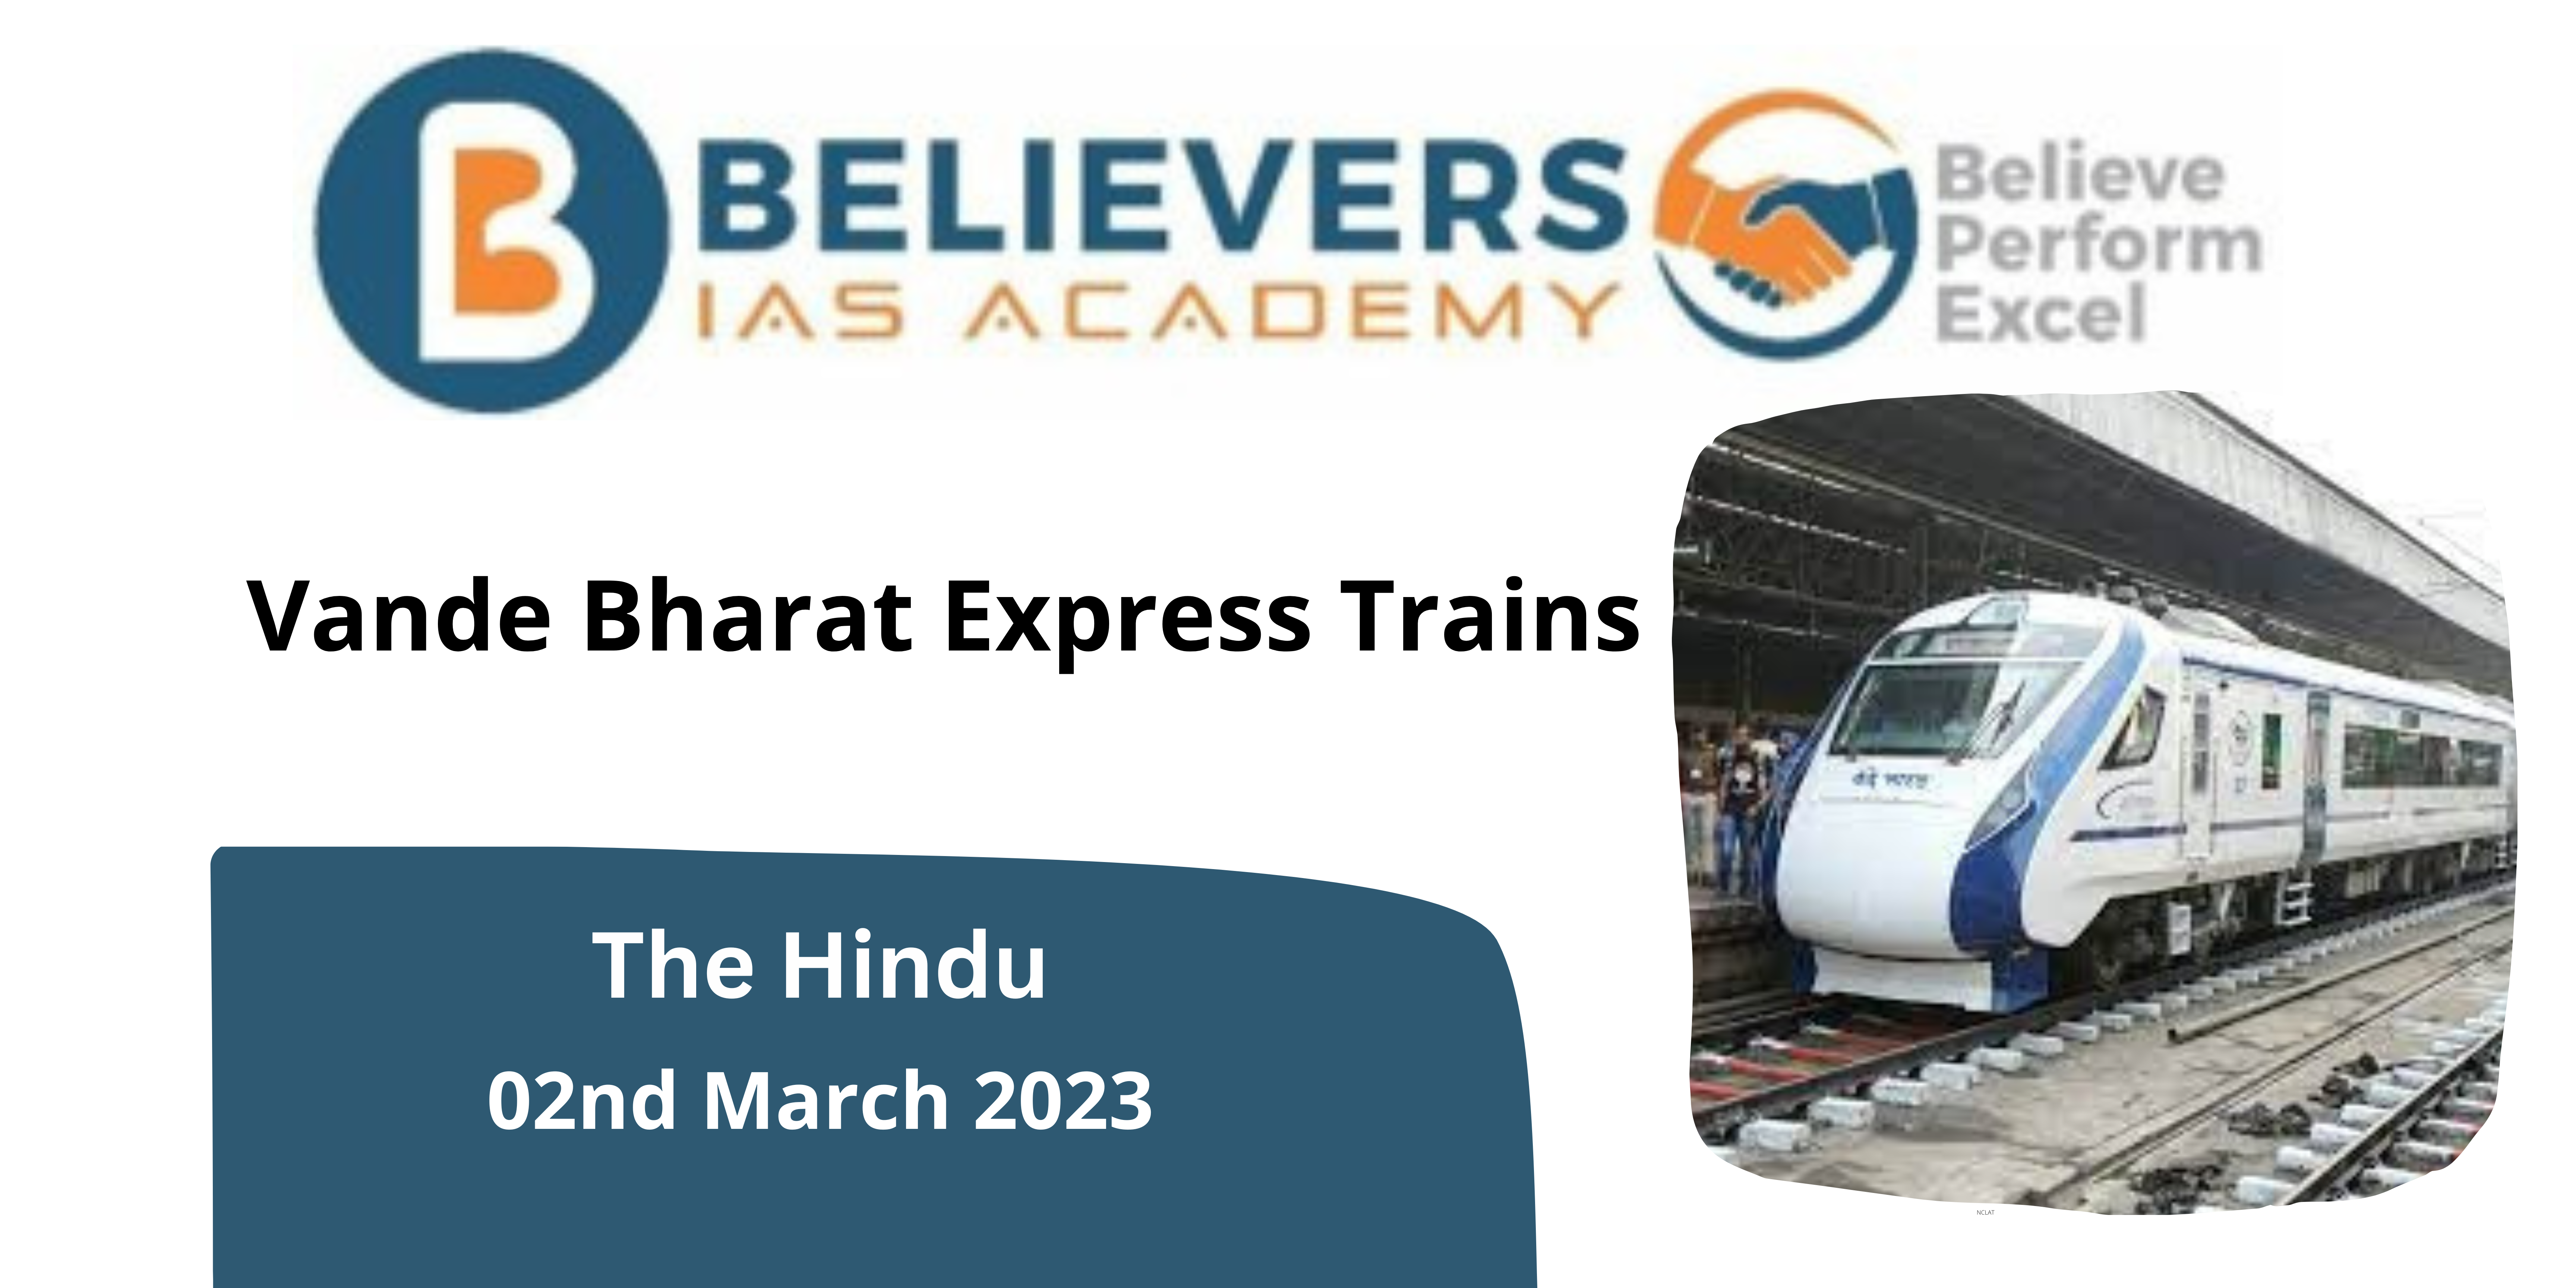 Details of the Vande Bharat Express Trains